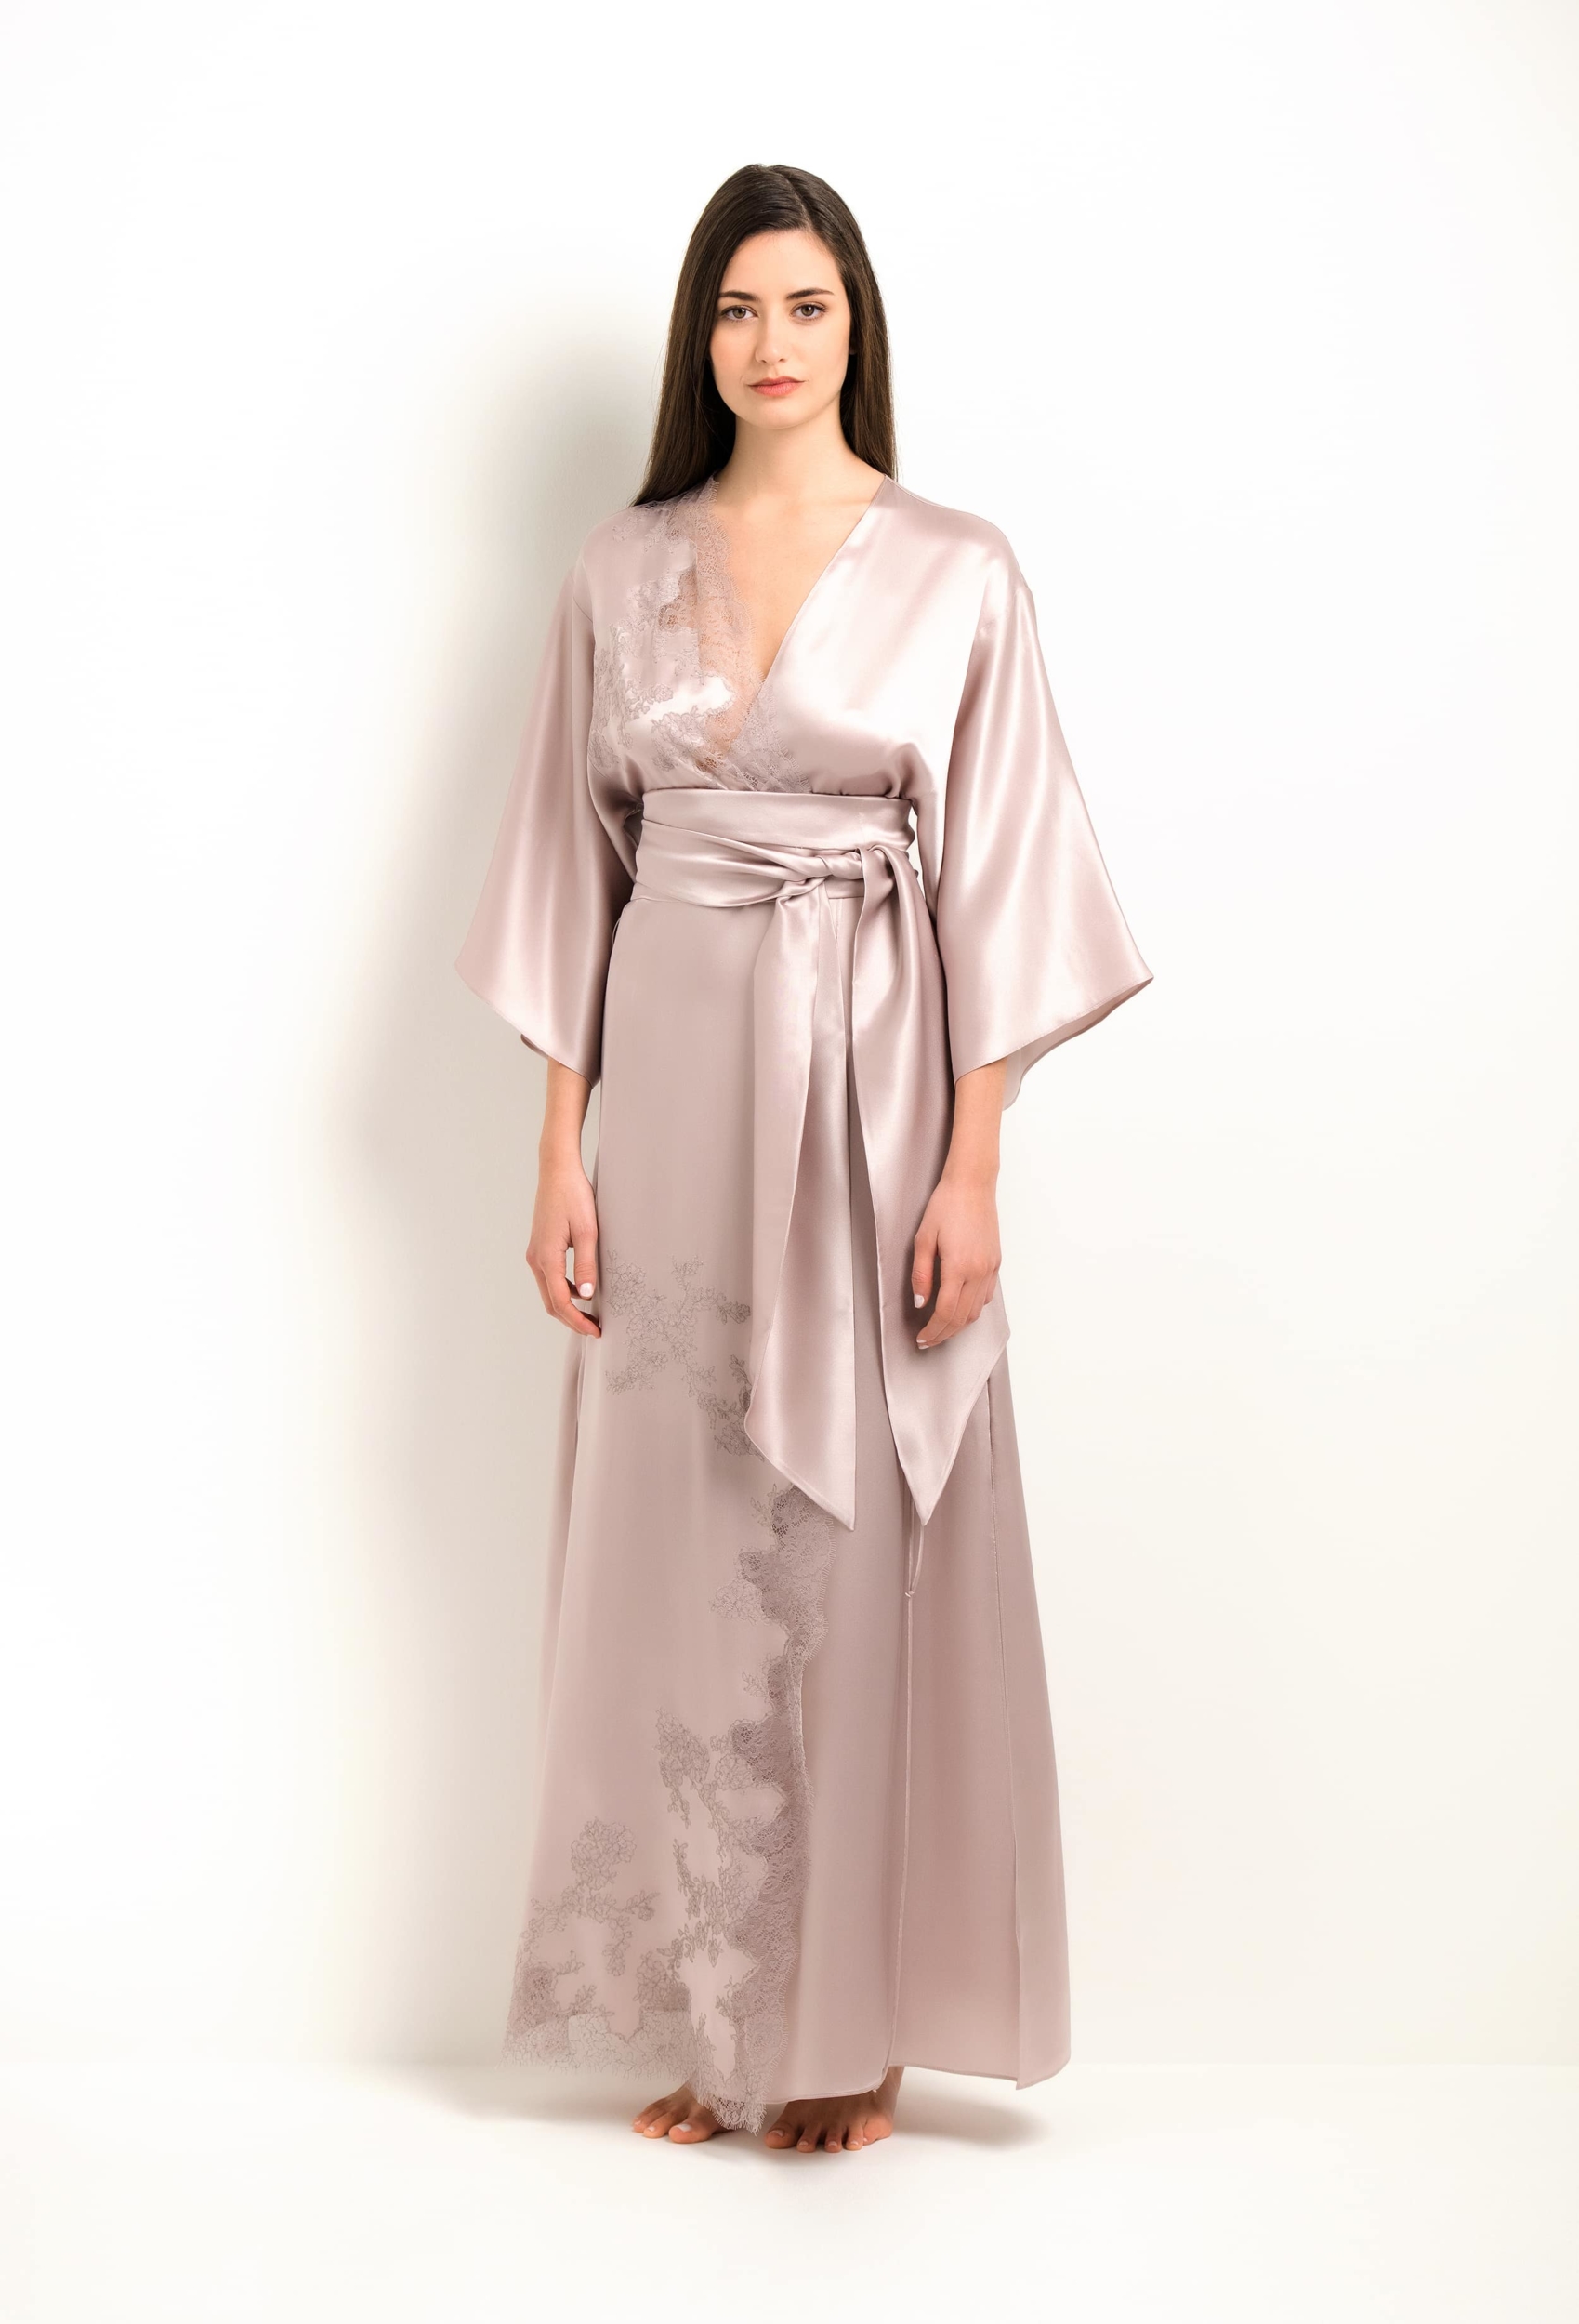 Kimonos - Carine Gilson